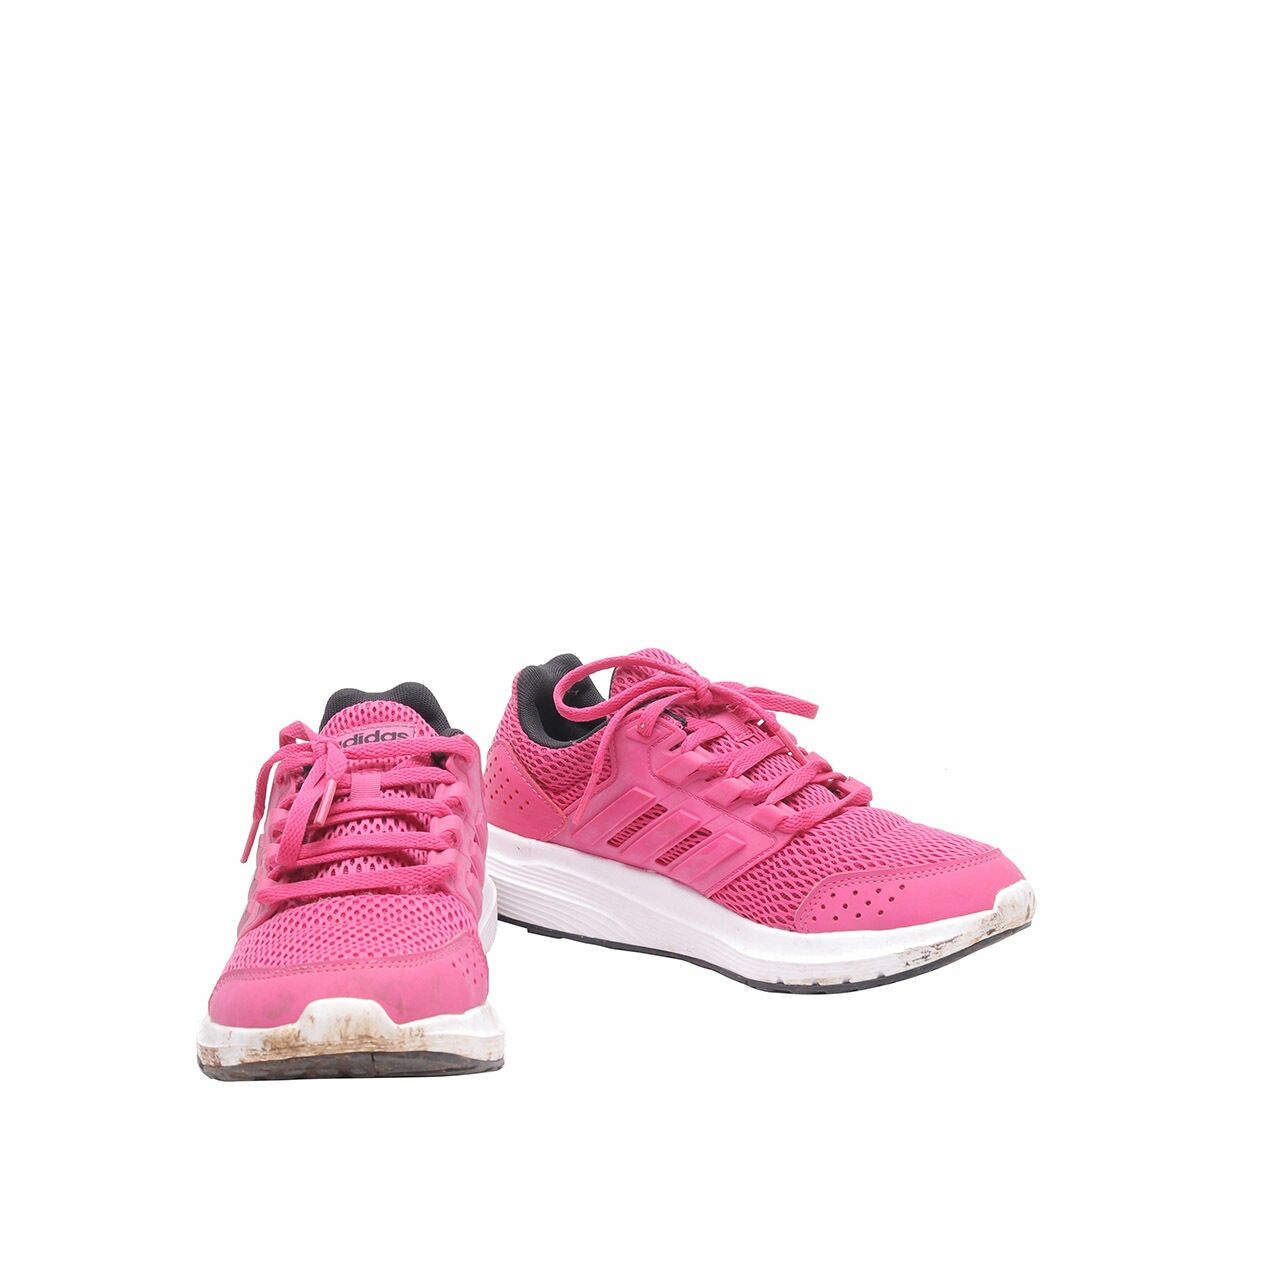 Adidas Galaxy 4 Pink Sneakers